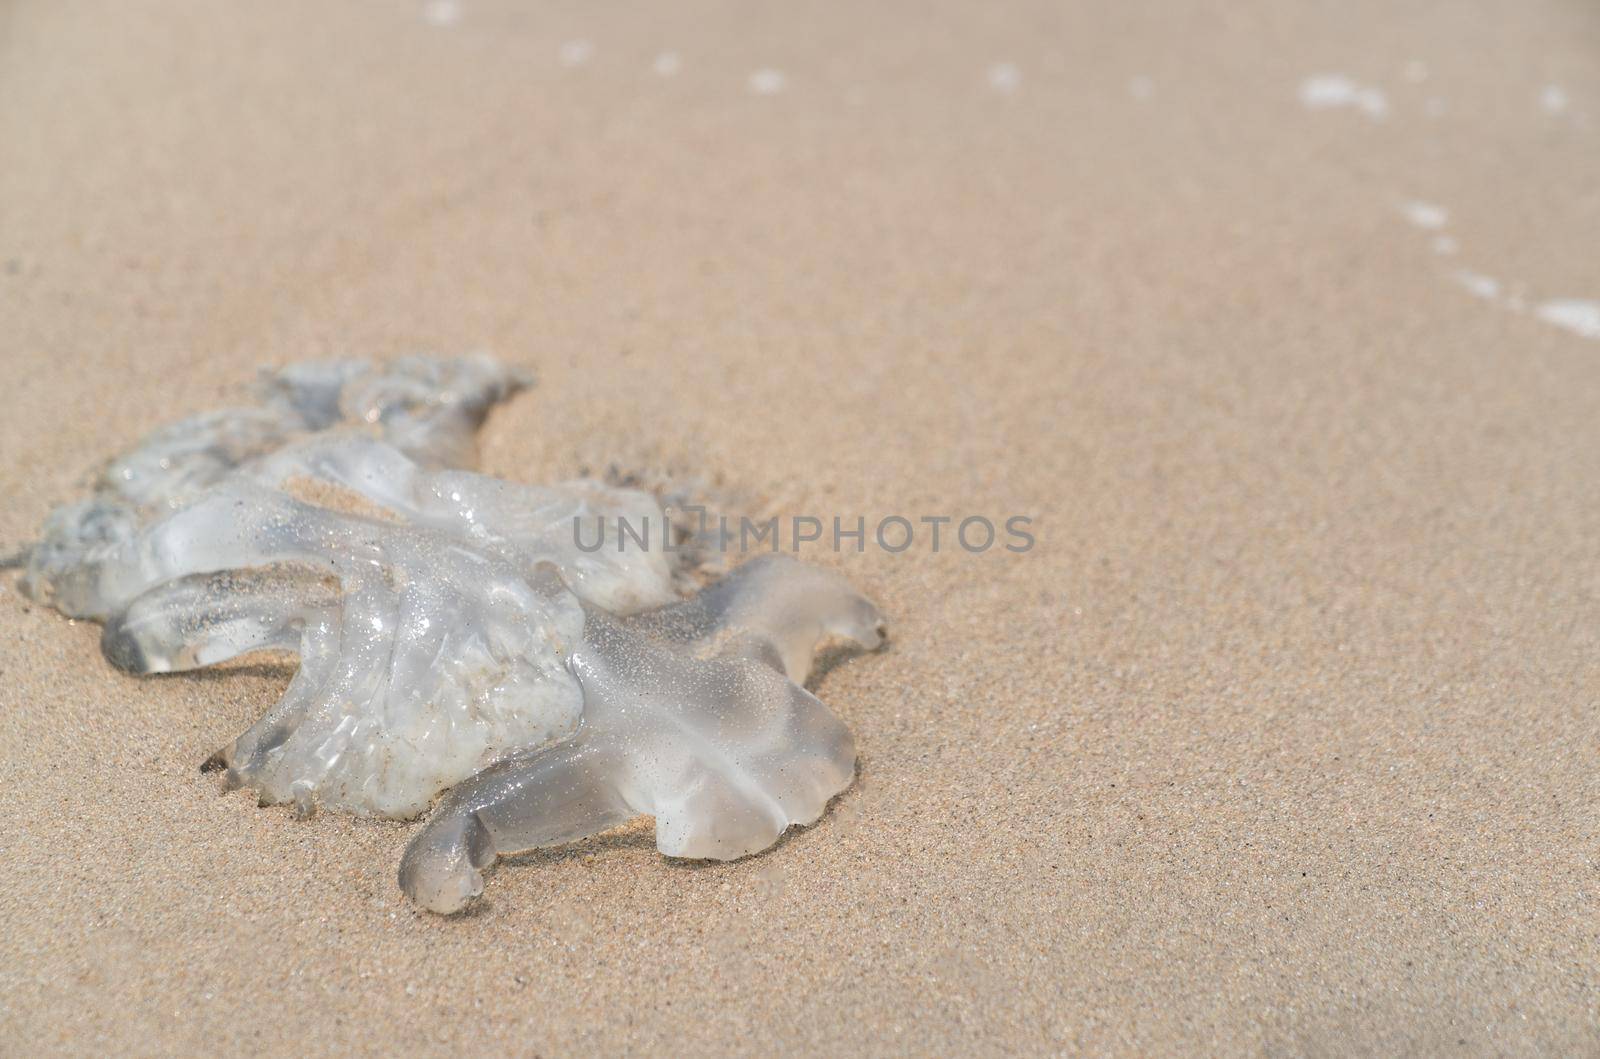 Died Jellyfish on the sand beach.